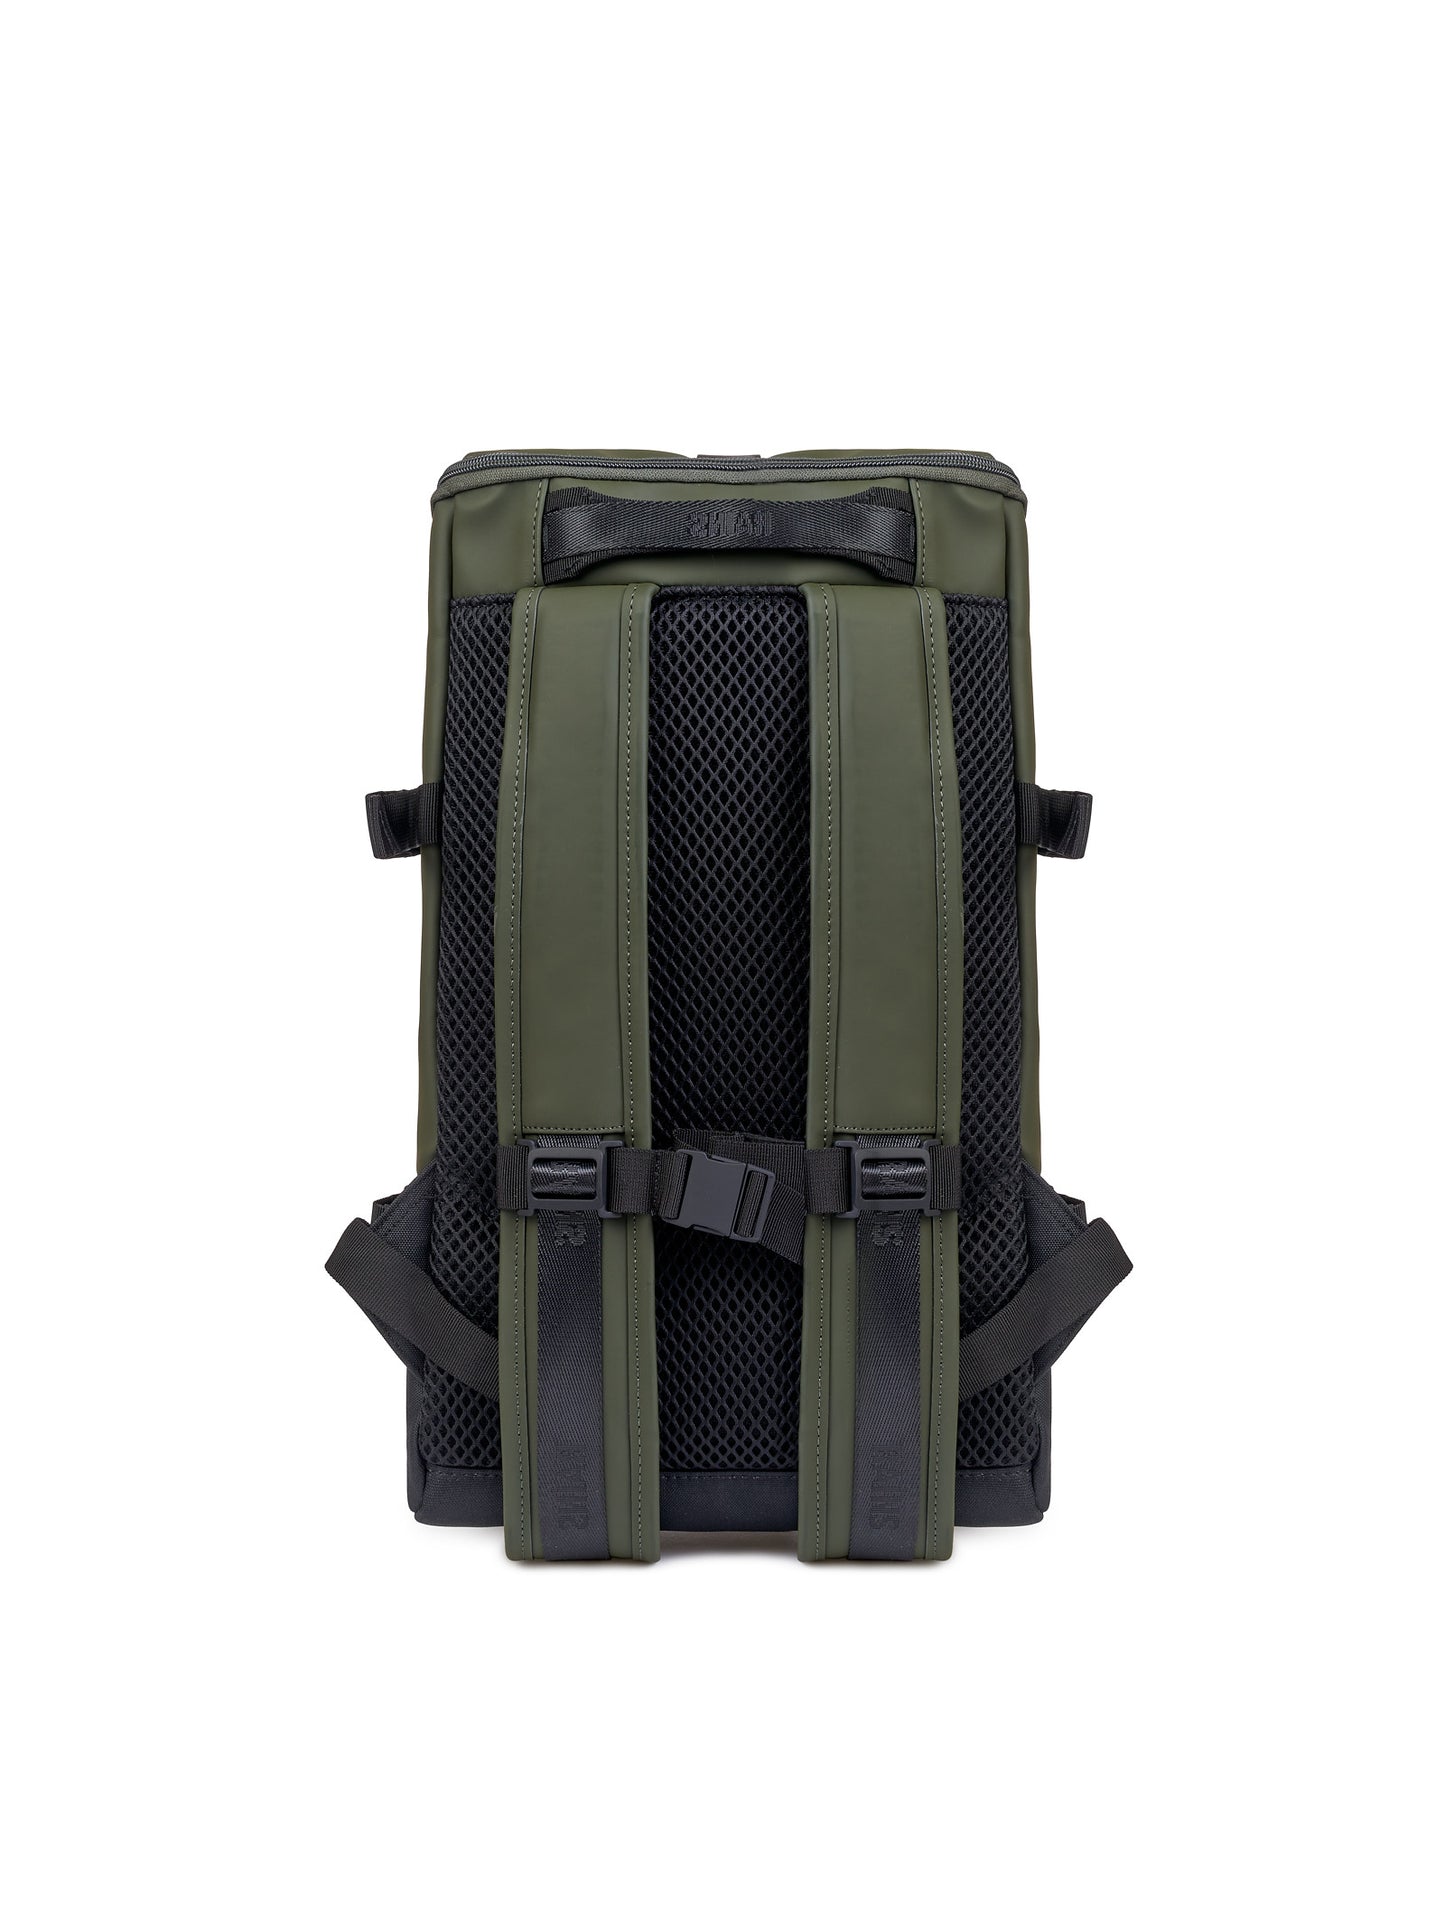 Zaino RAINS Trail cargo backpack
Verde militare